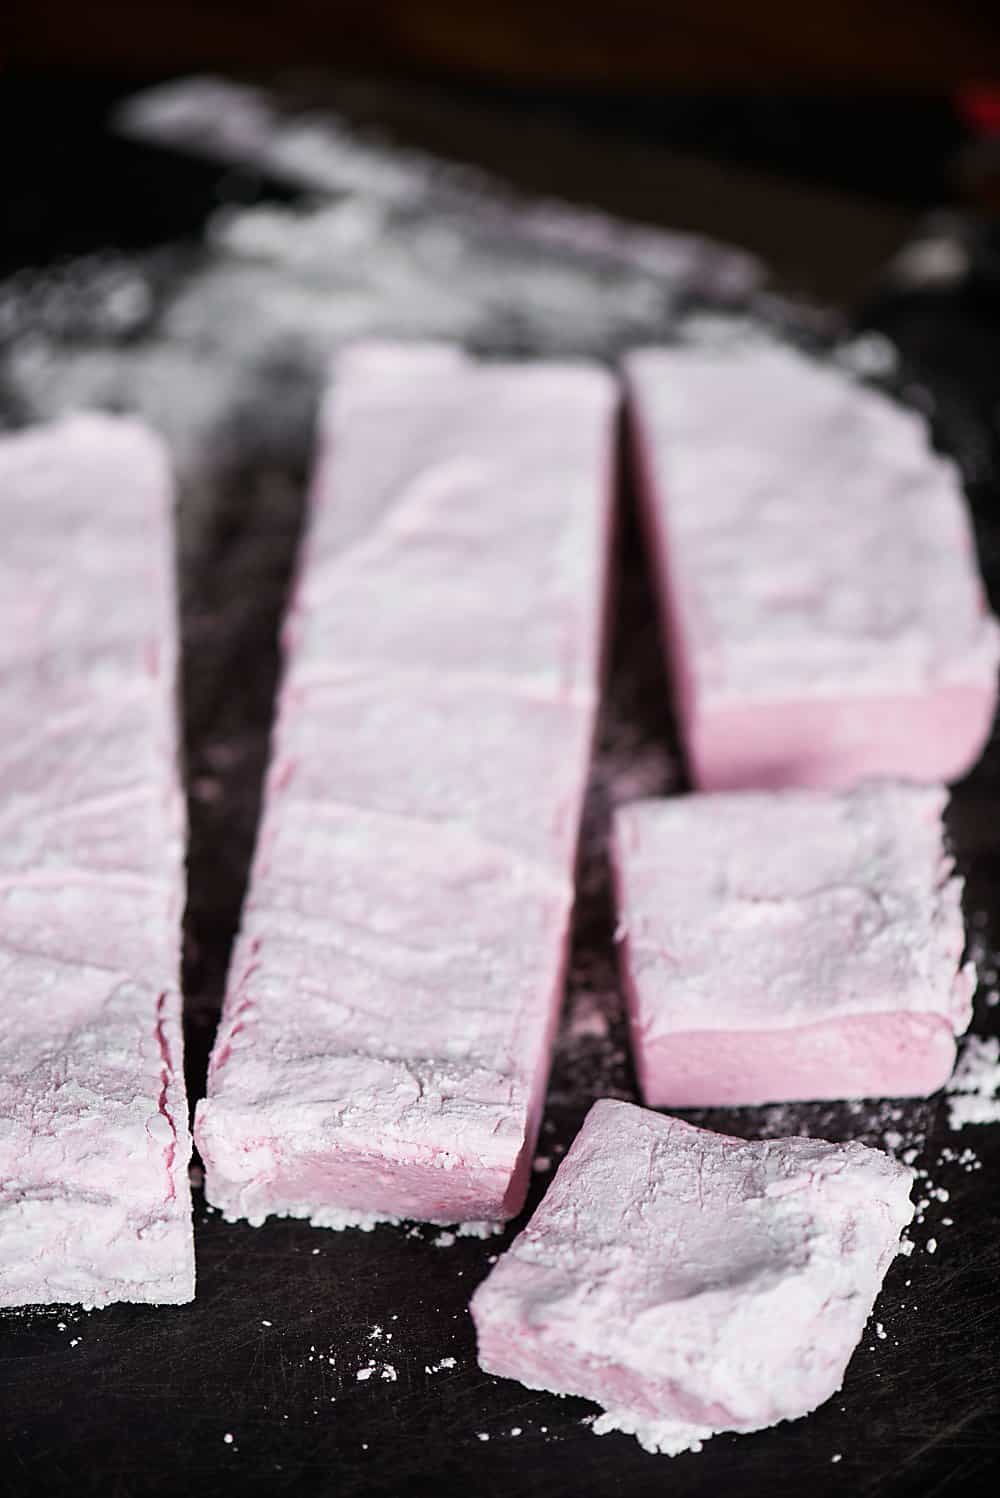 raspberry marshmallows